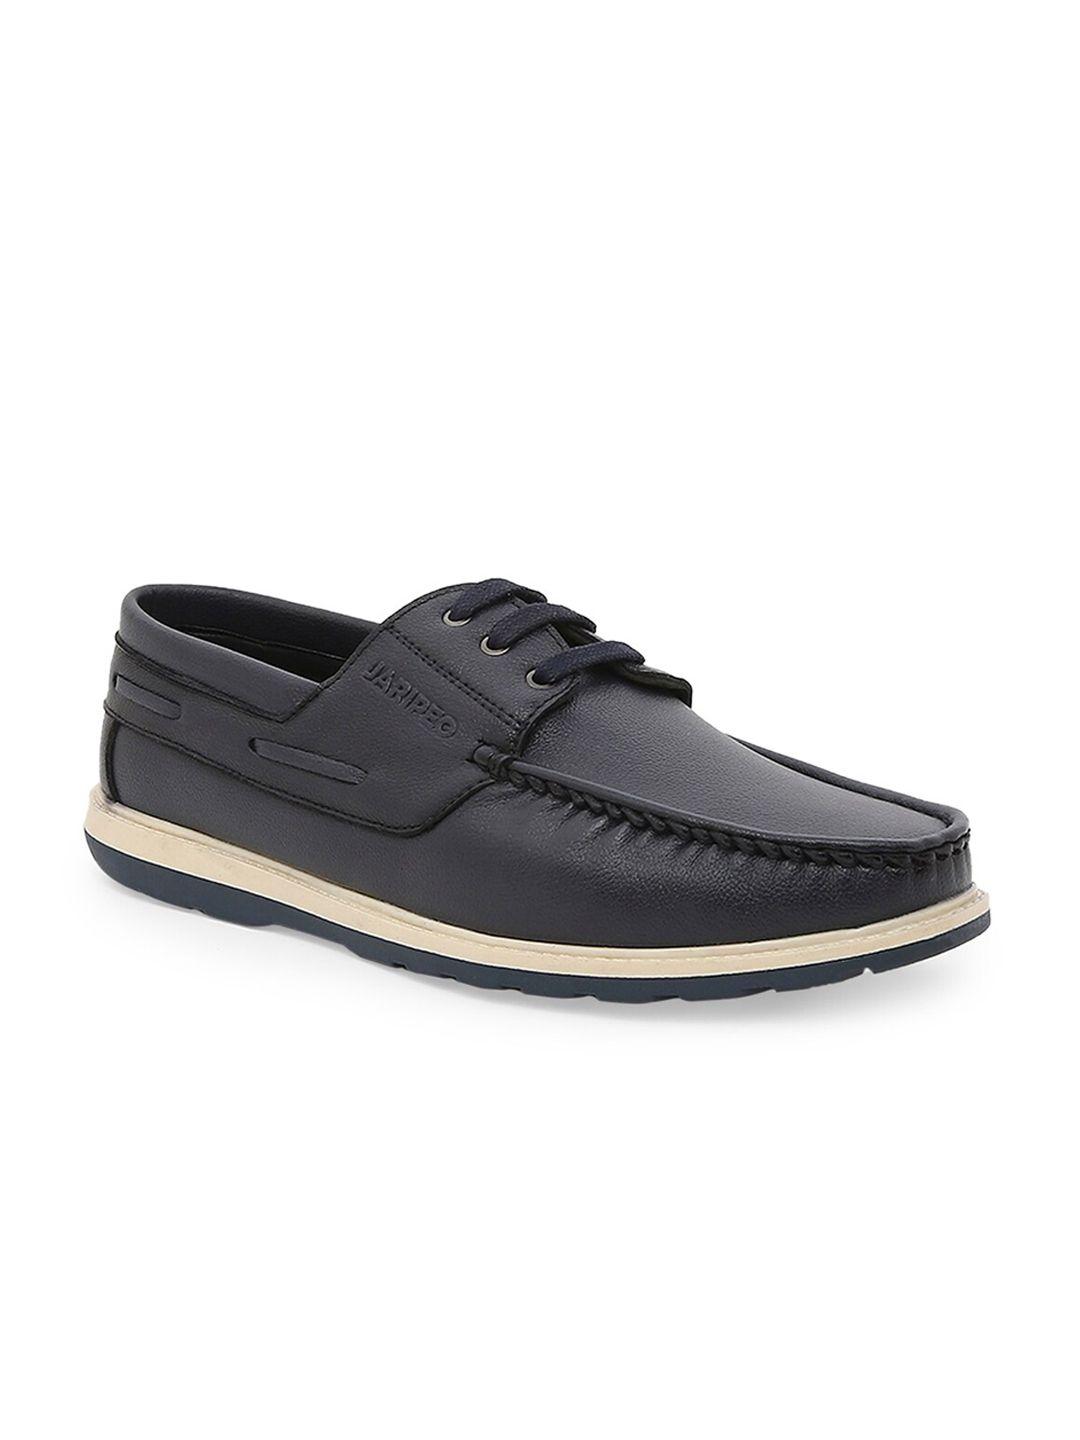 buckaroo men navy blue leather boat shoes